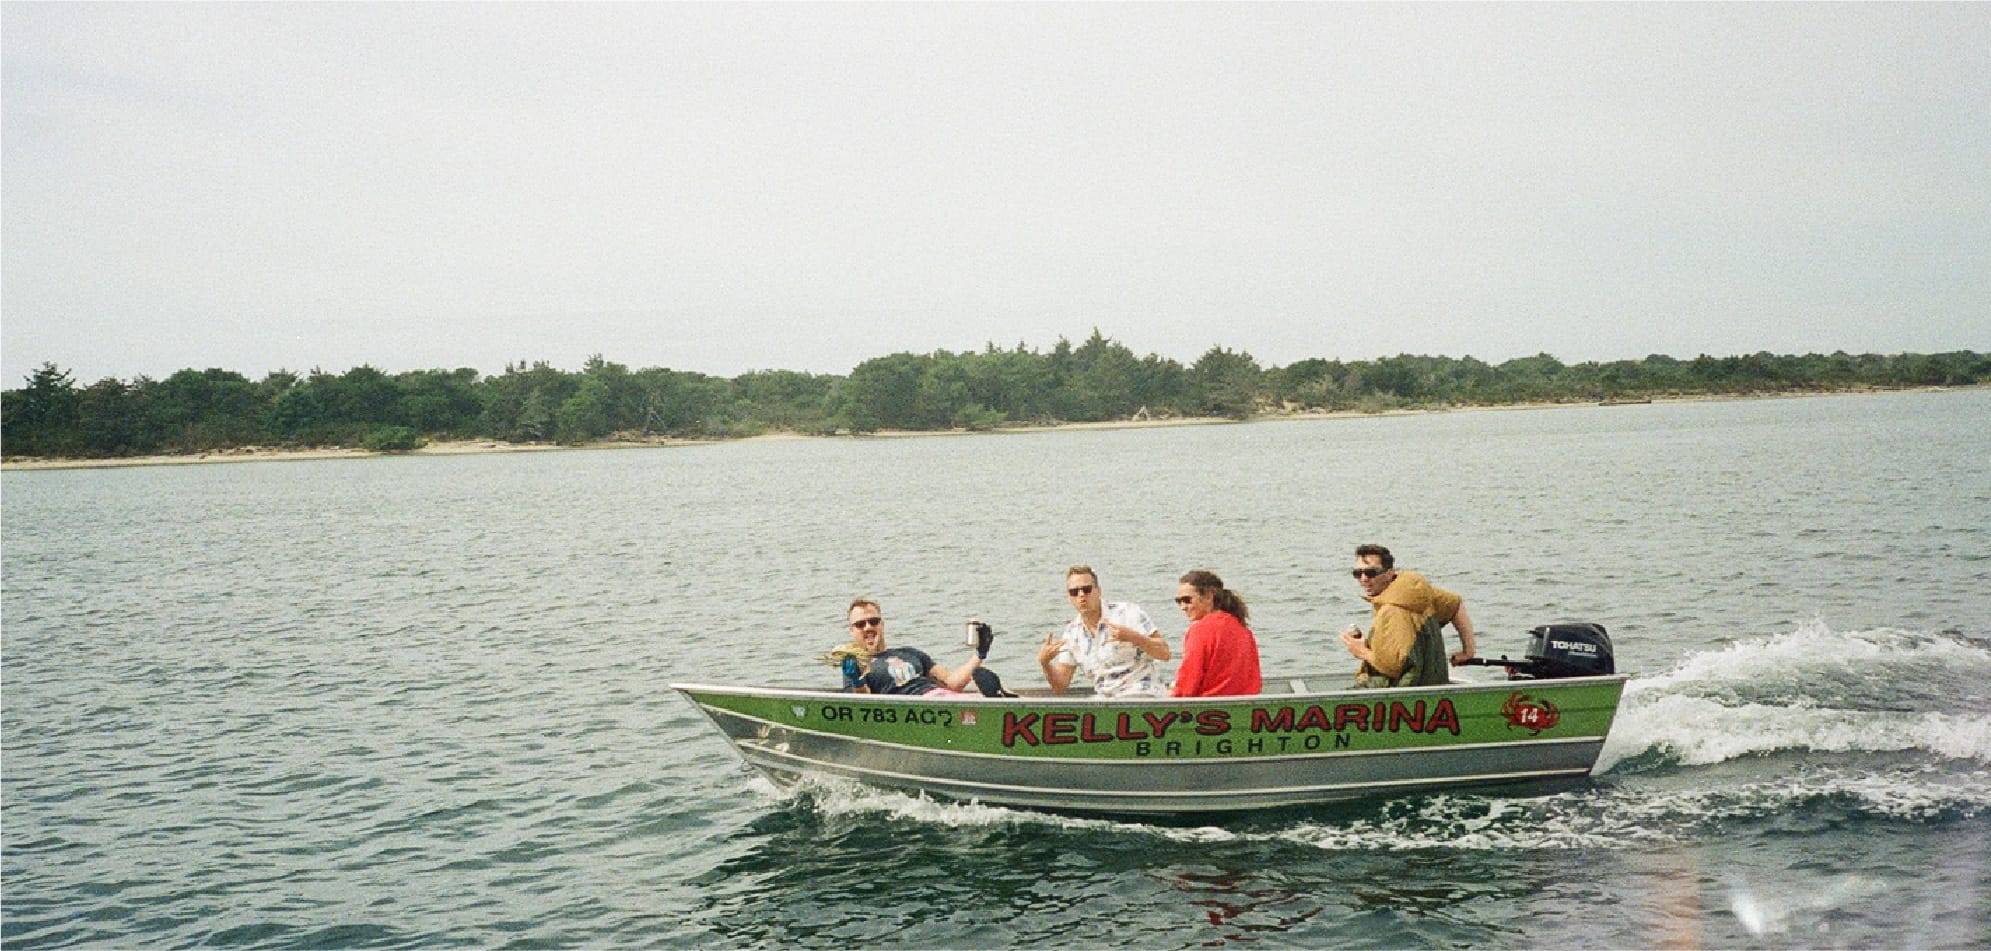 Rumpl team in a boat in Brighton Oregon at Kelly's Marina